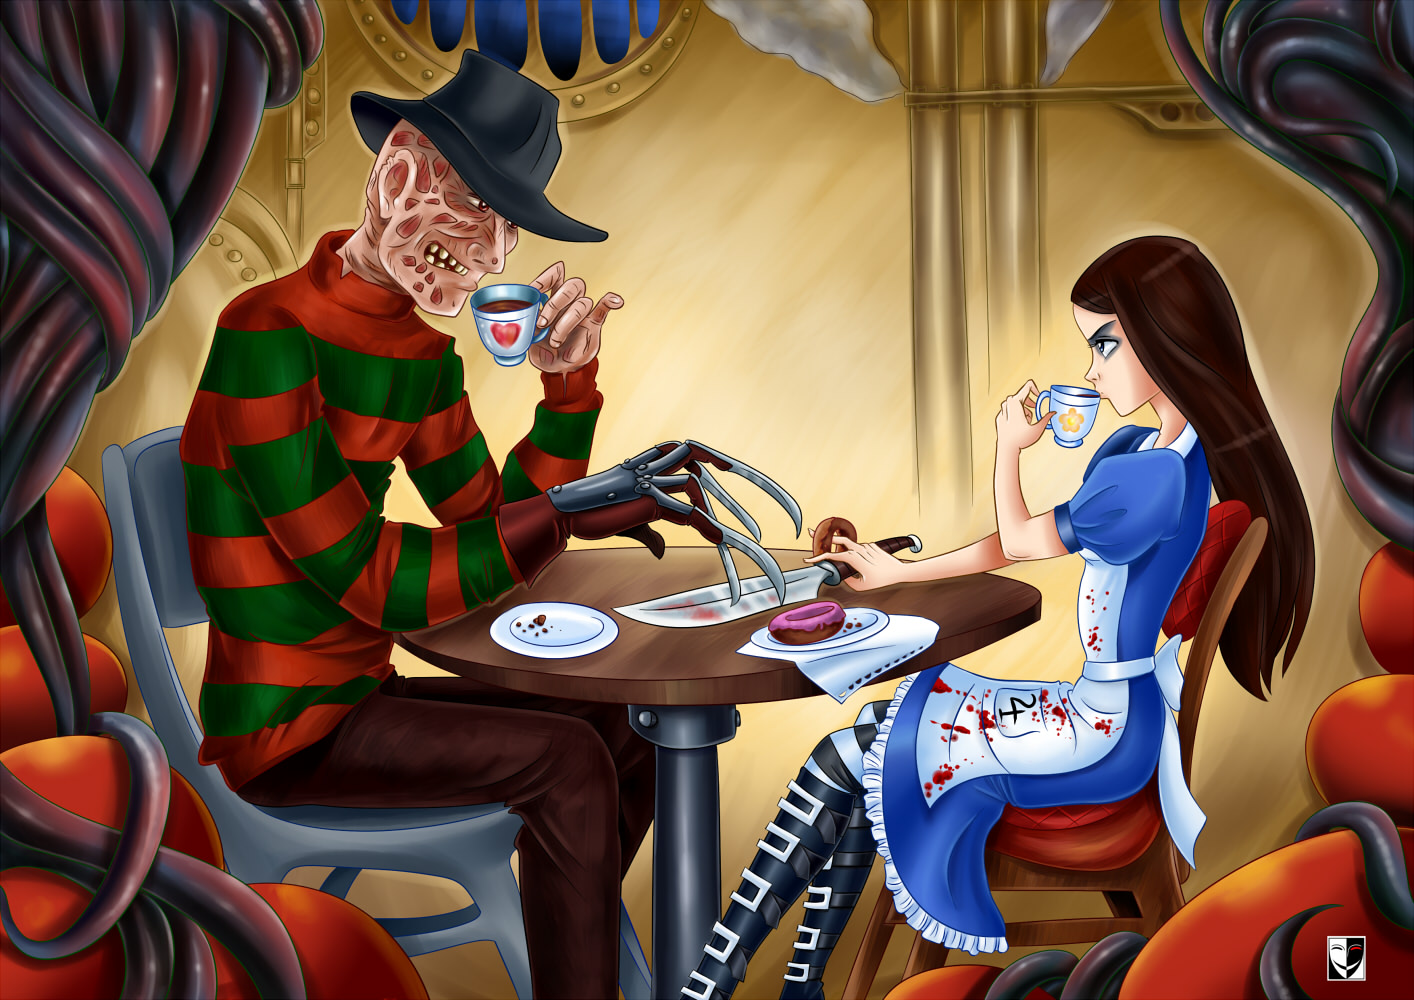 Star Wars tea party in Wonderland 2 by LadyKryptonat on DeviantArt